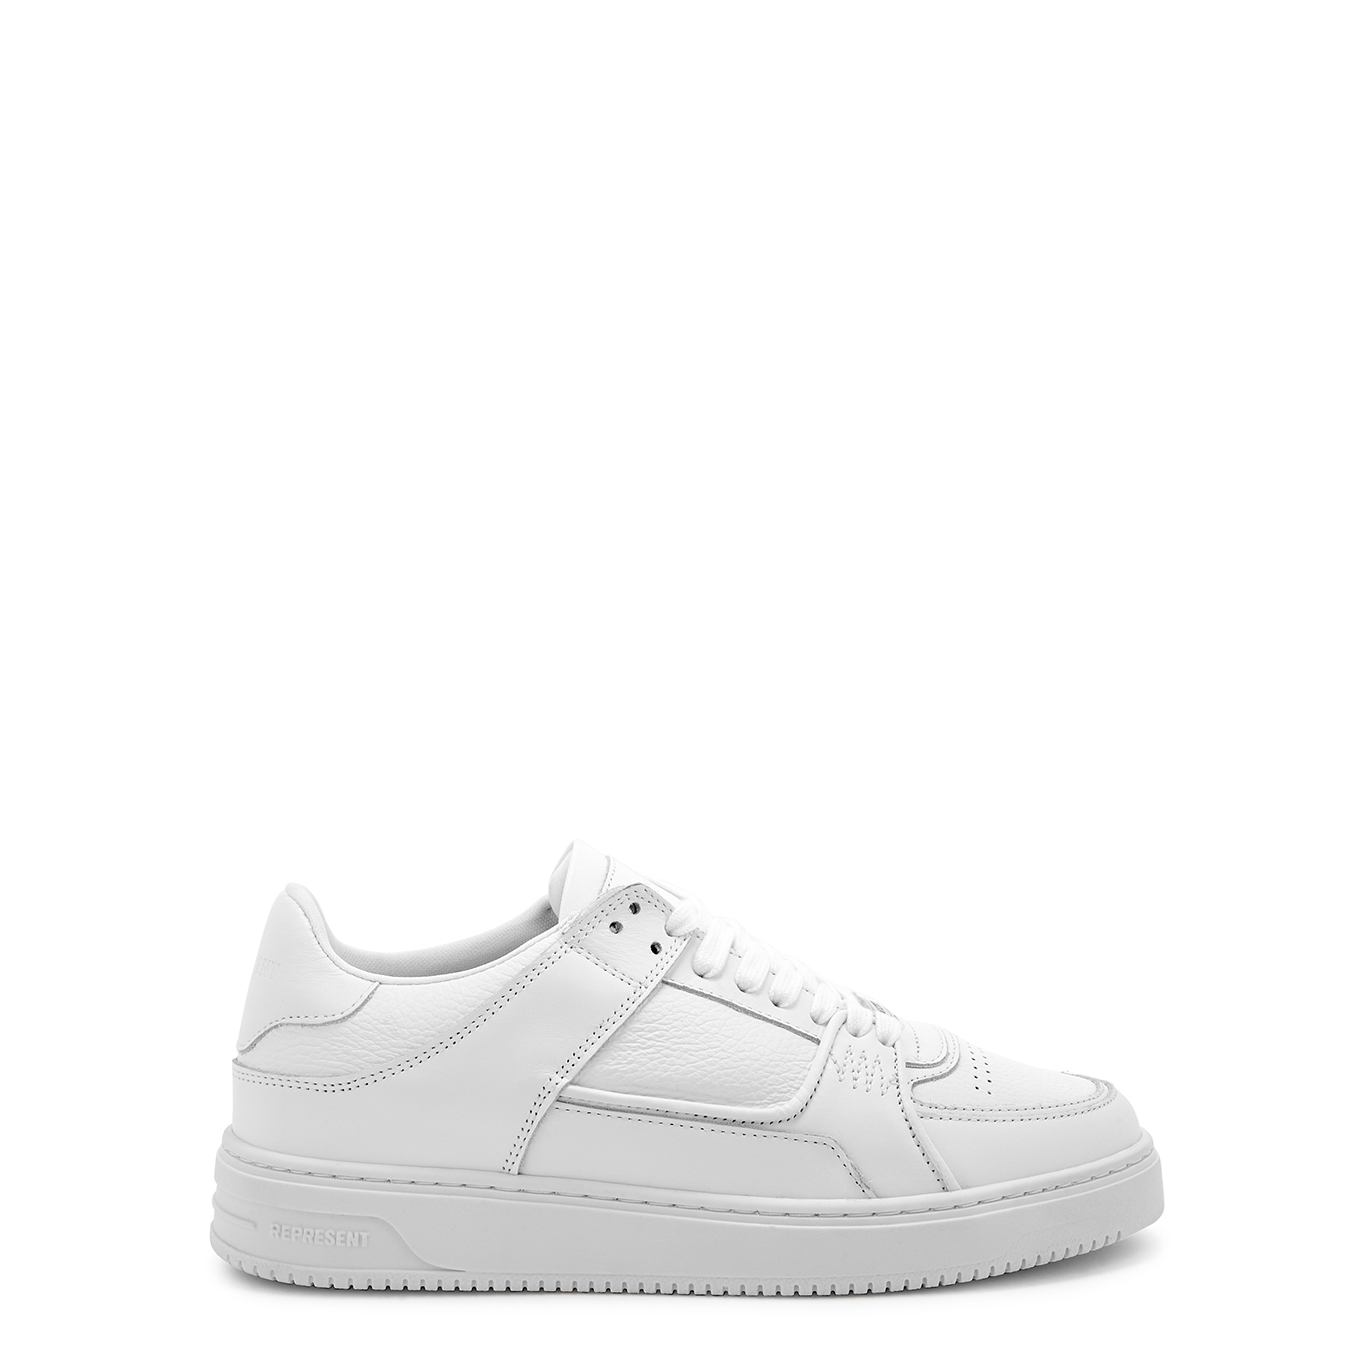 Represent Apex Nubuck Sneakers - White - 8